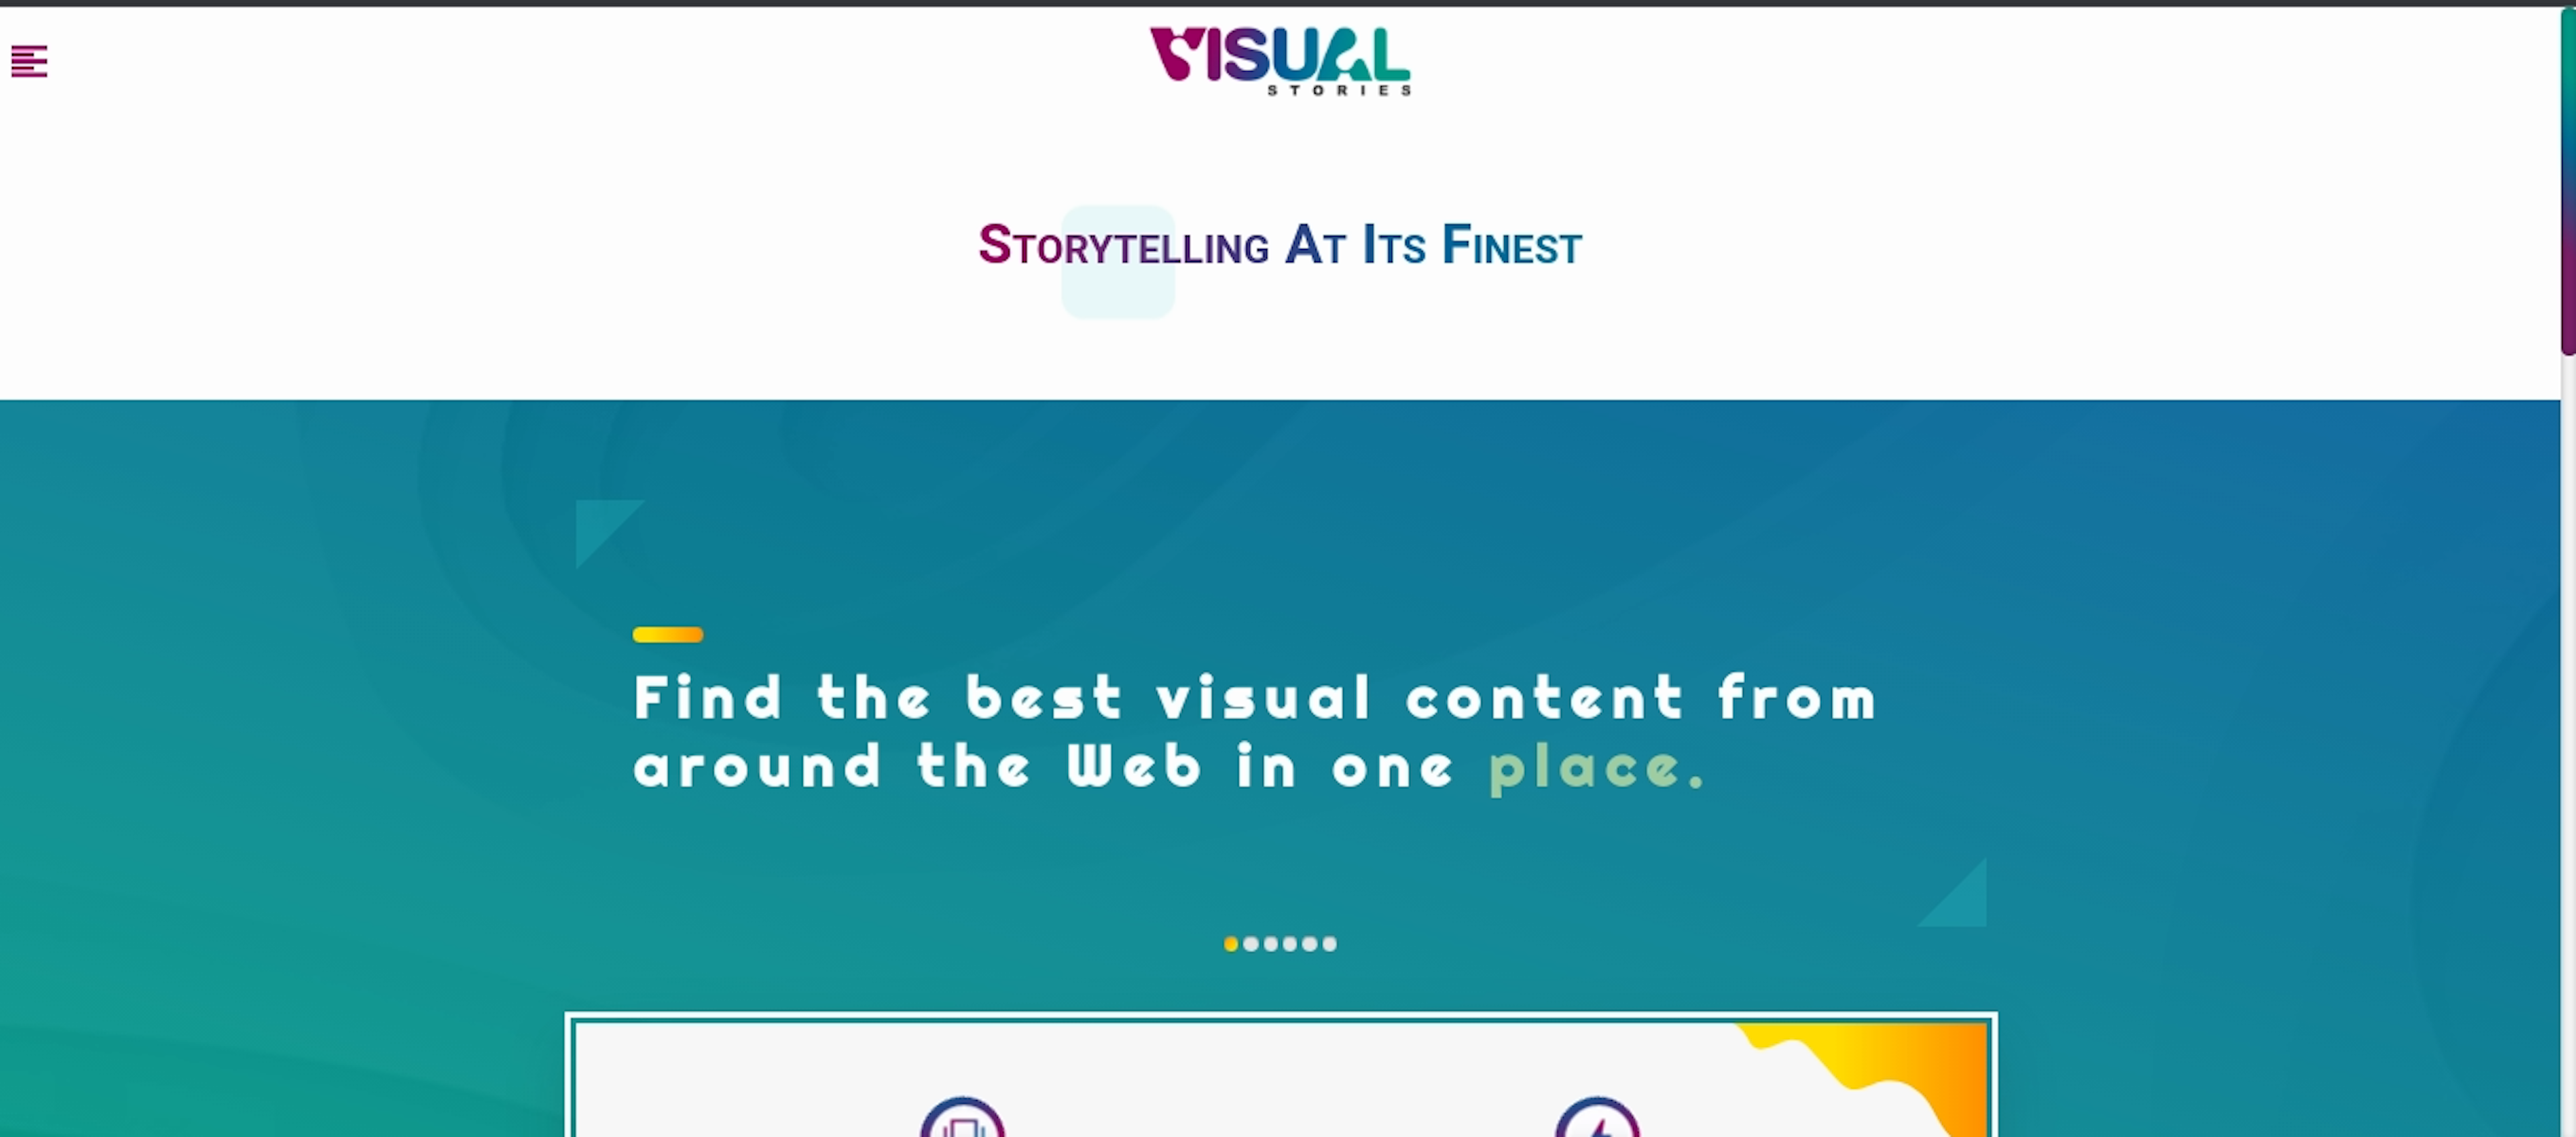 visualstories.com